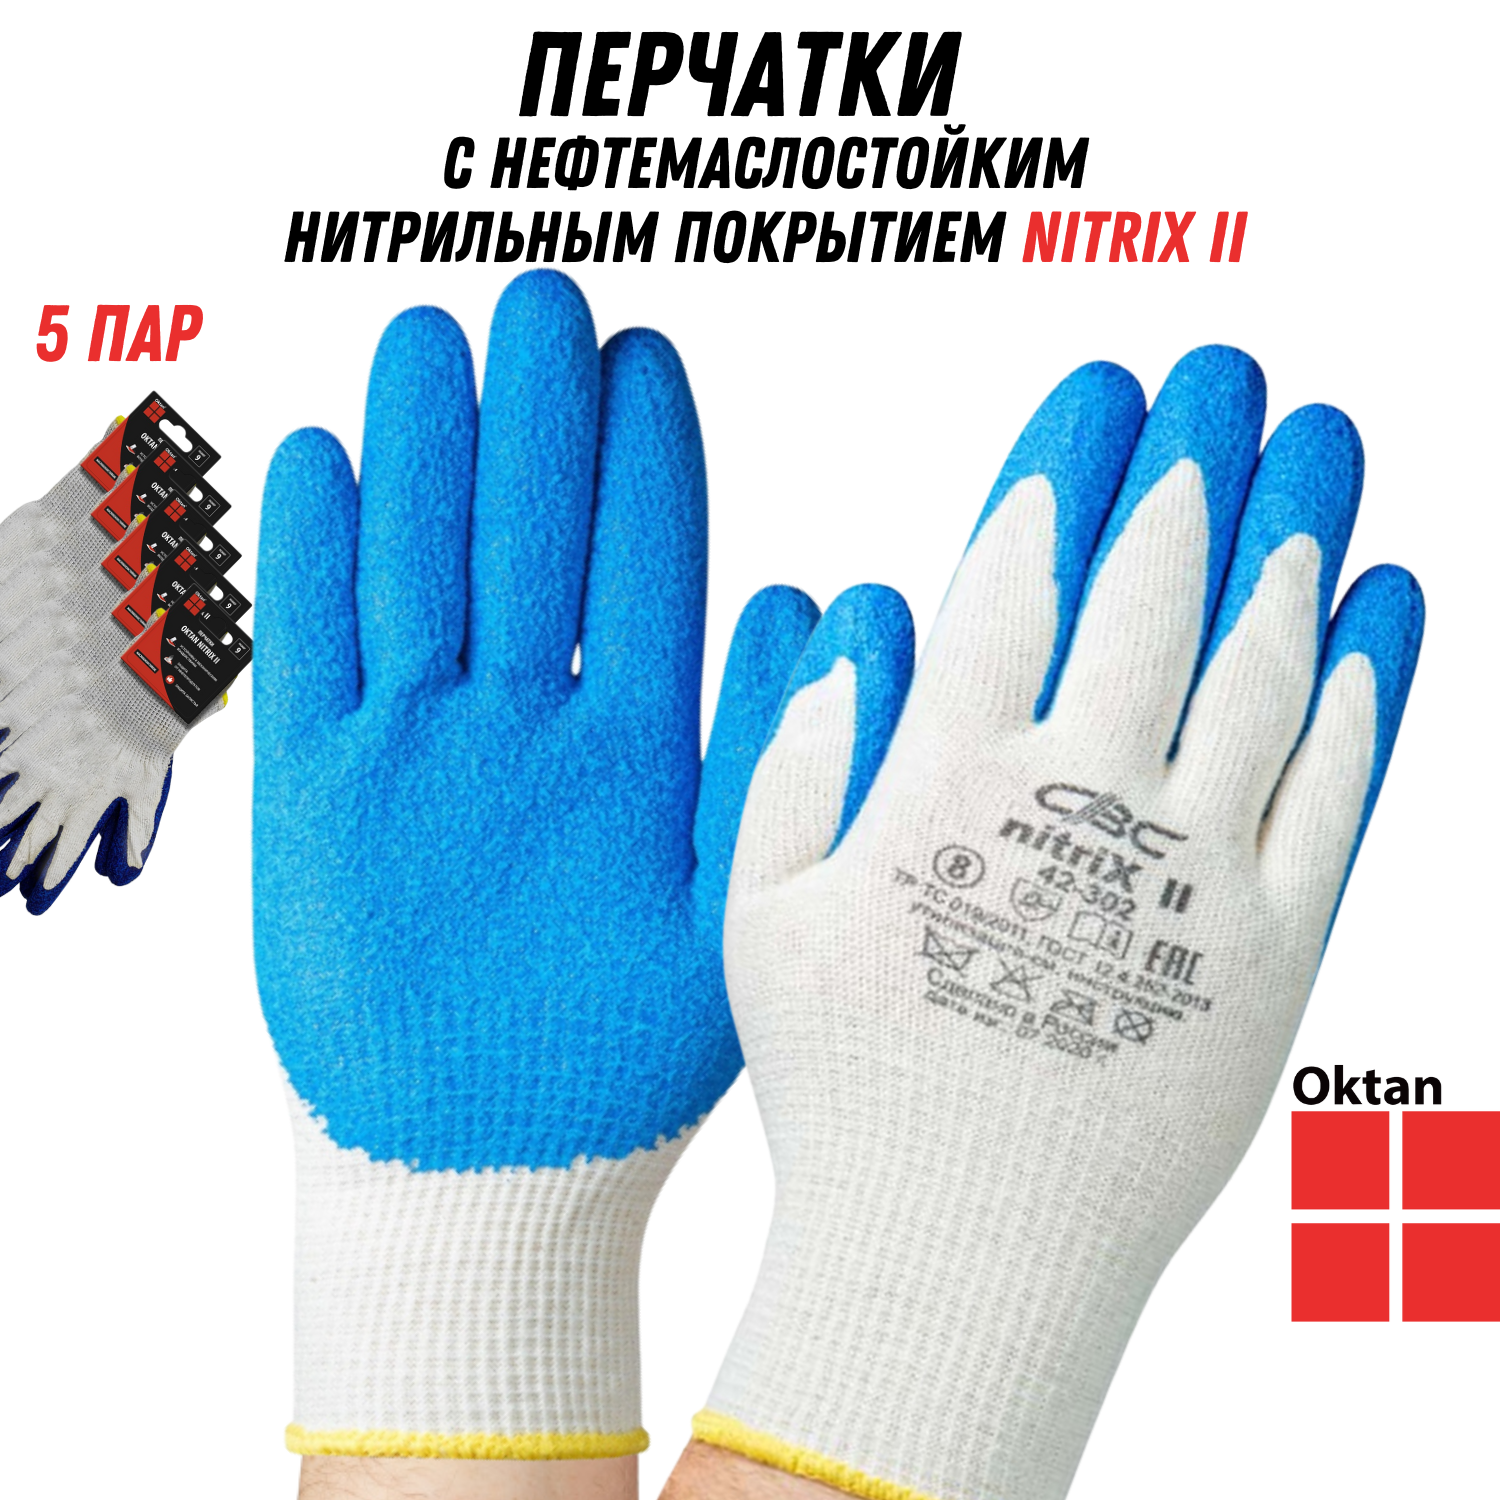 фото Перчатки рабочие oktan nitrix ii а5-01-21-05-мм белые с синим размер 9, 5 пар